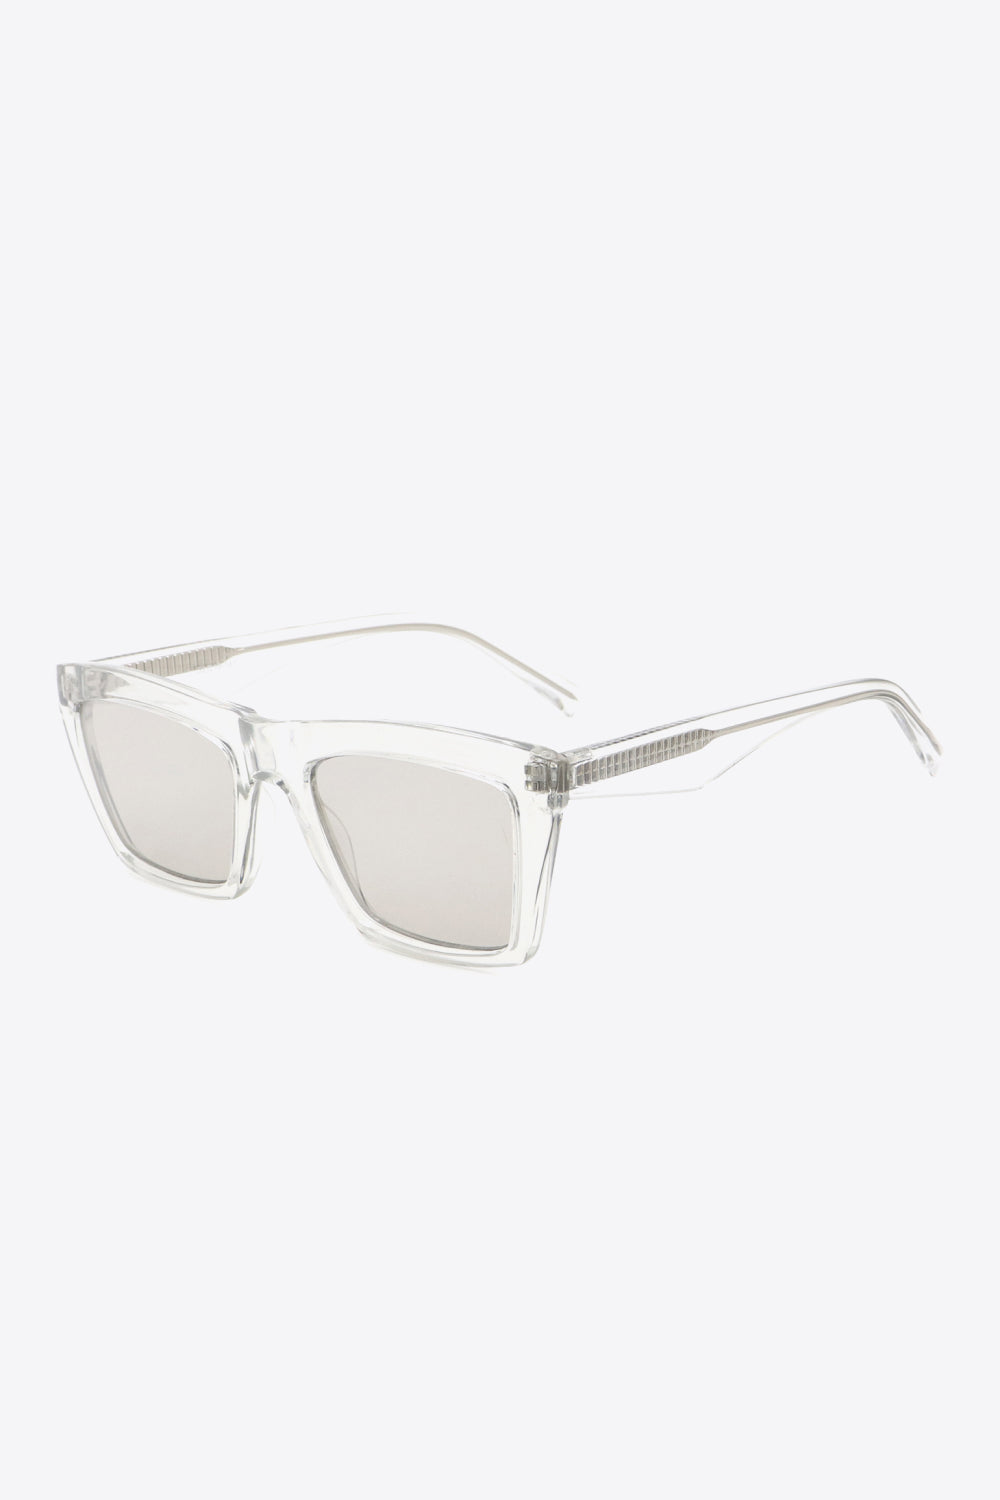 Traci K Collection Cellulose Propionate Frame Rectangle Sunglasses